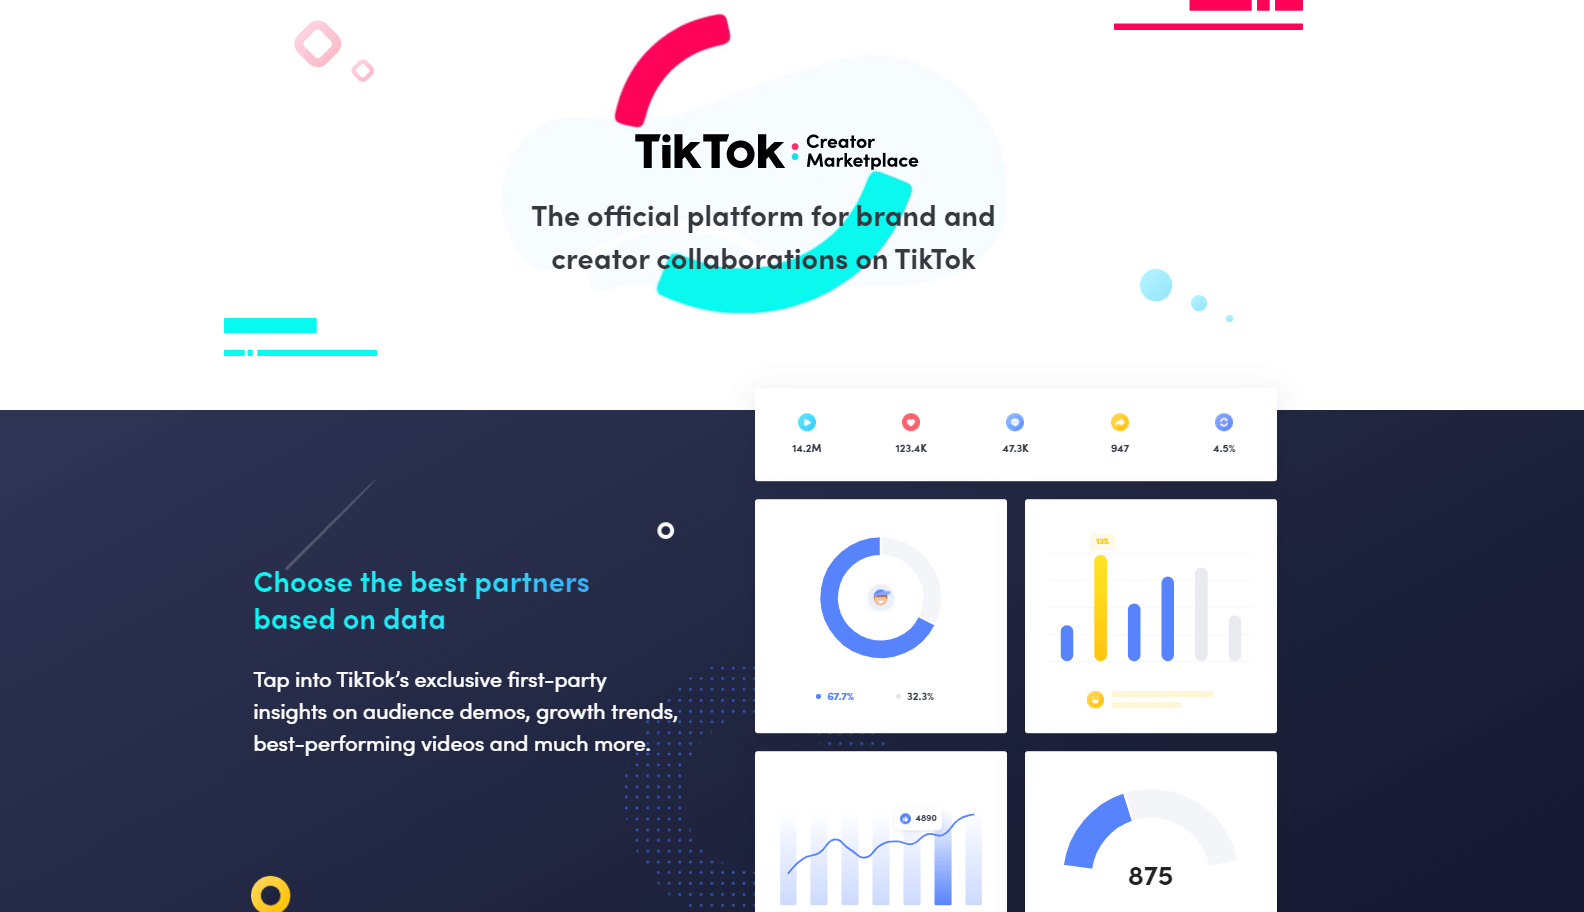 The TikTok creator marketplace.